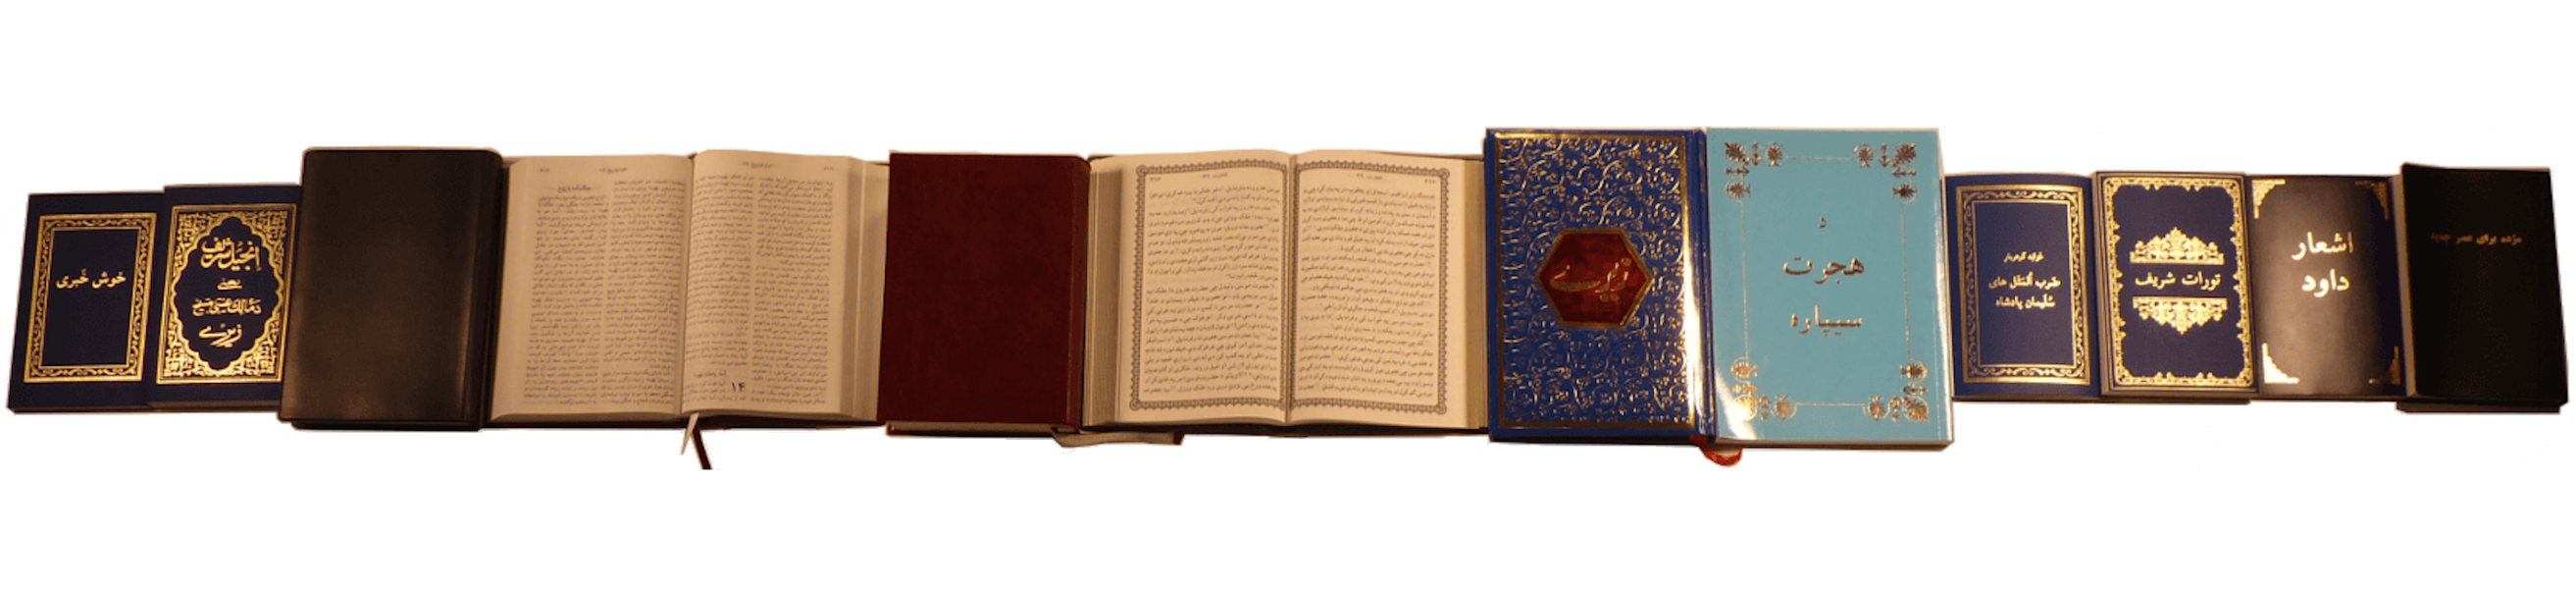 Afghan Bibles